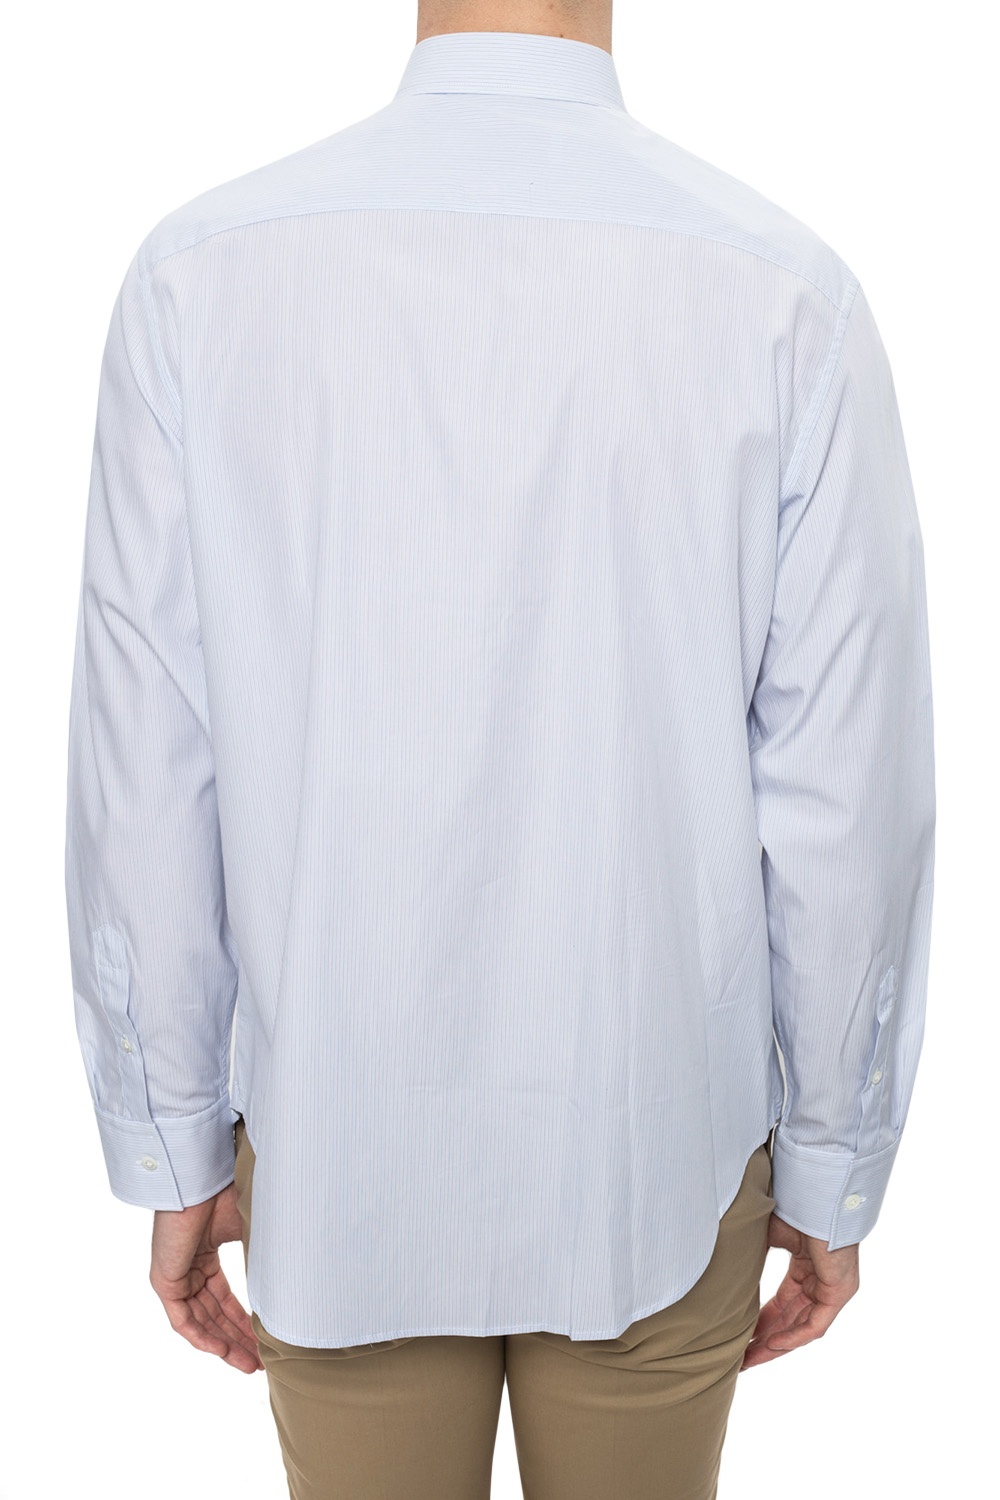 Lanvin Patterned shirt